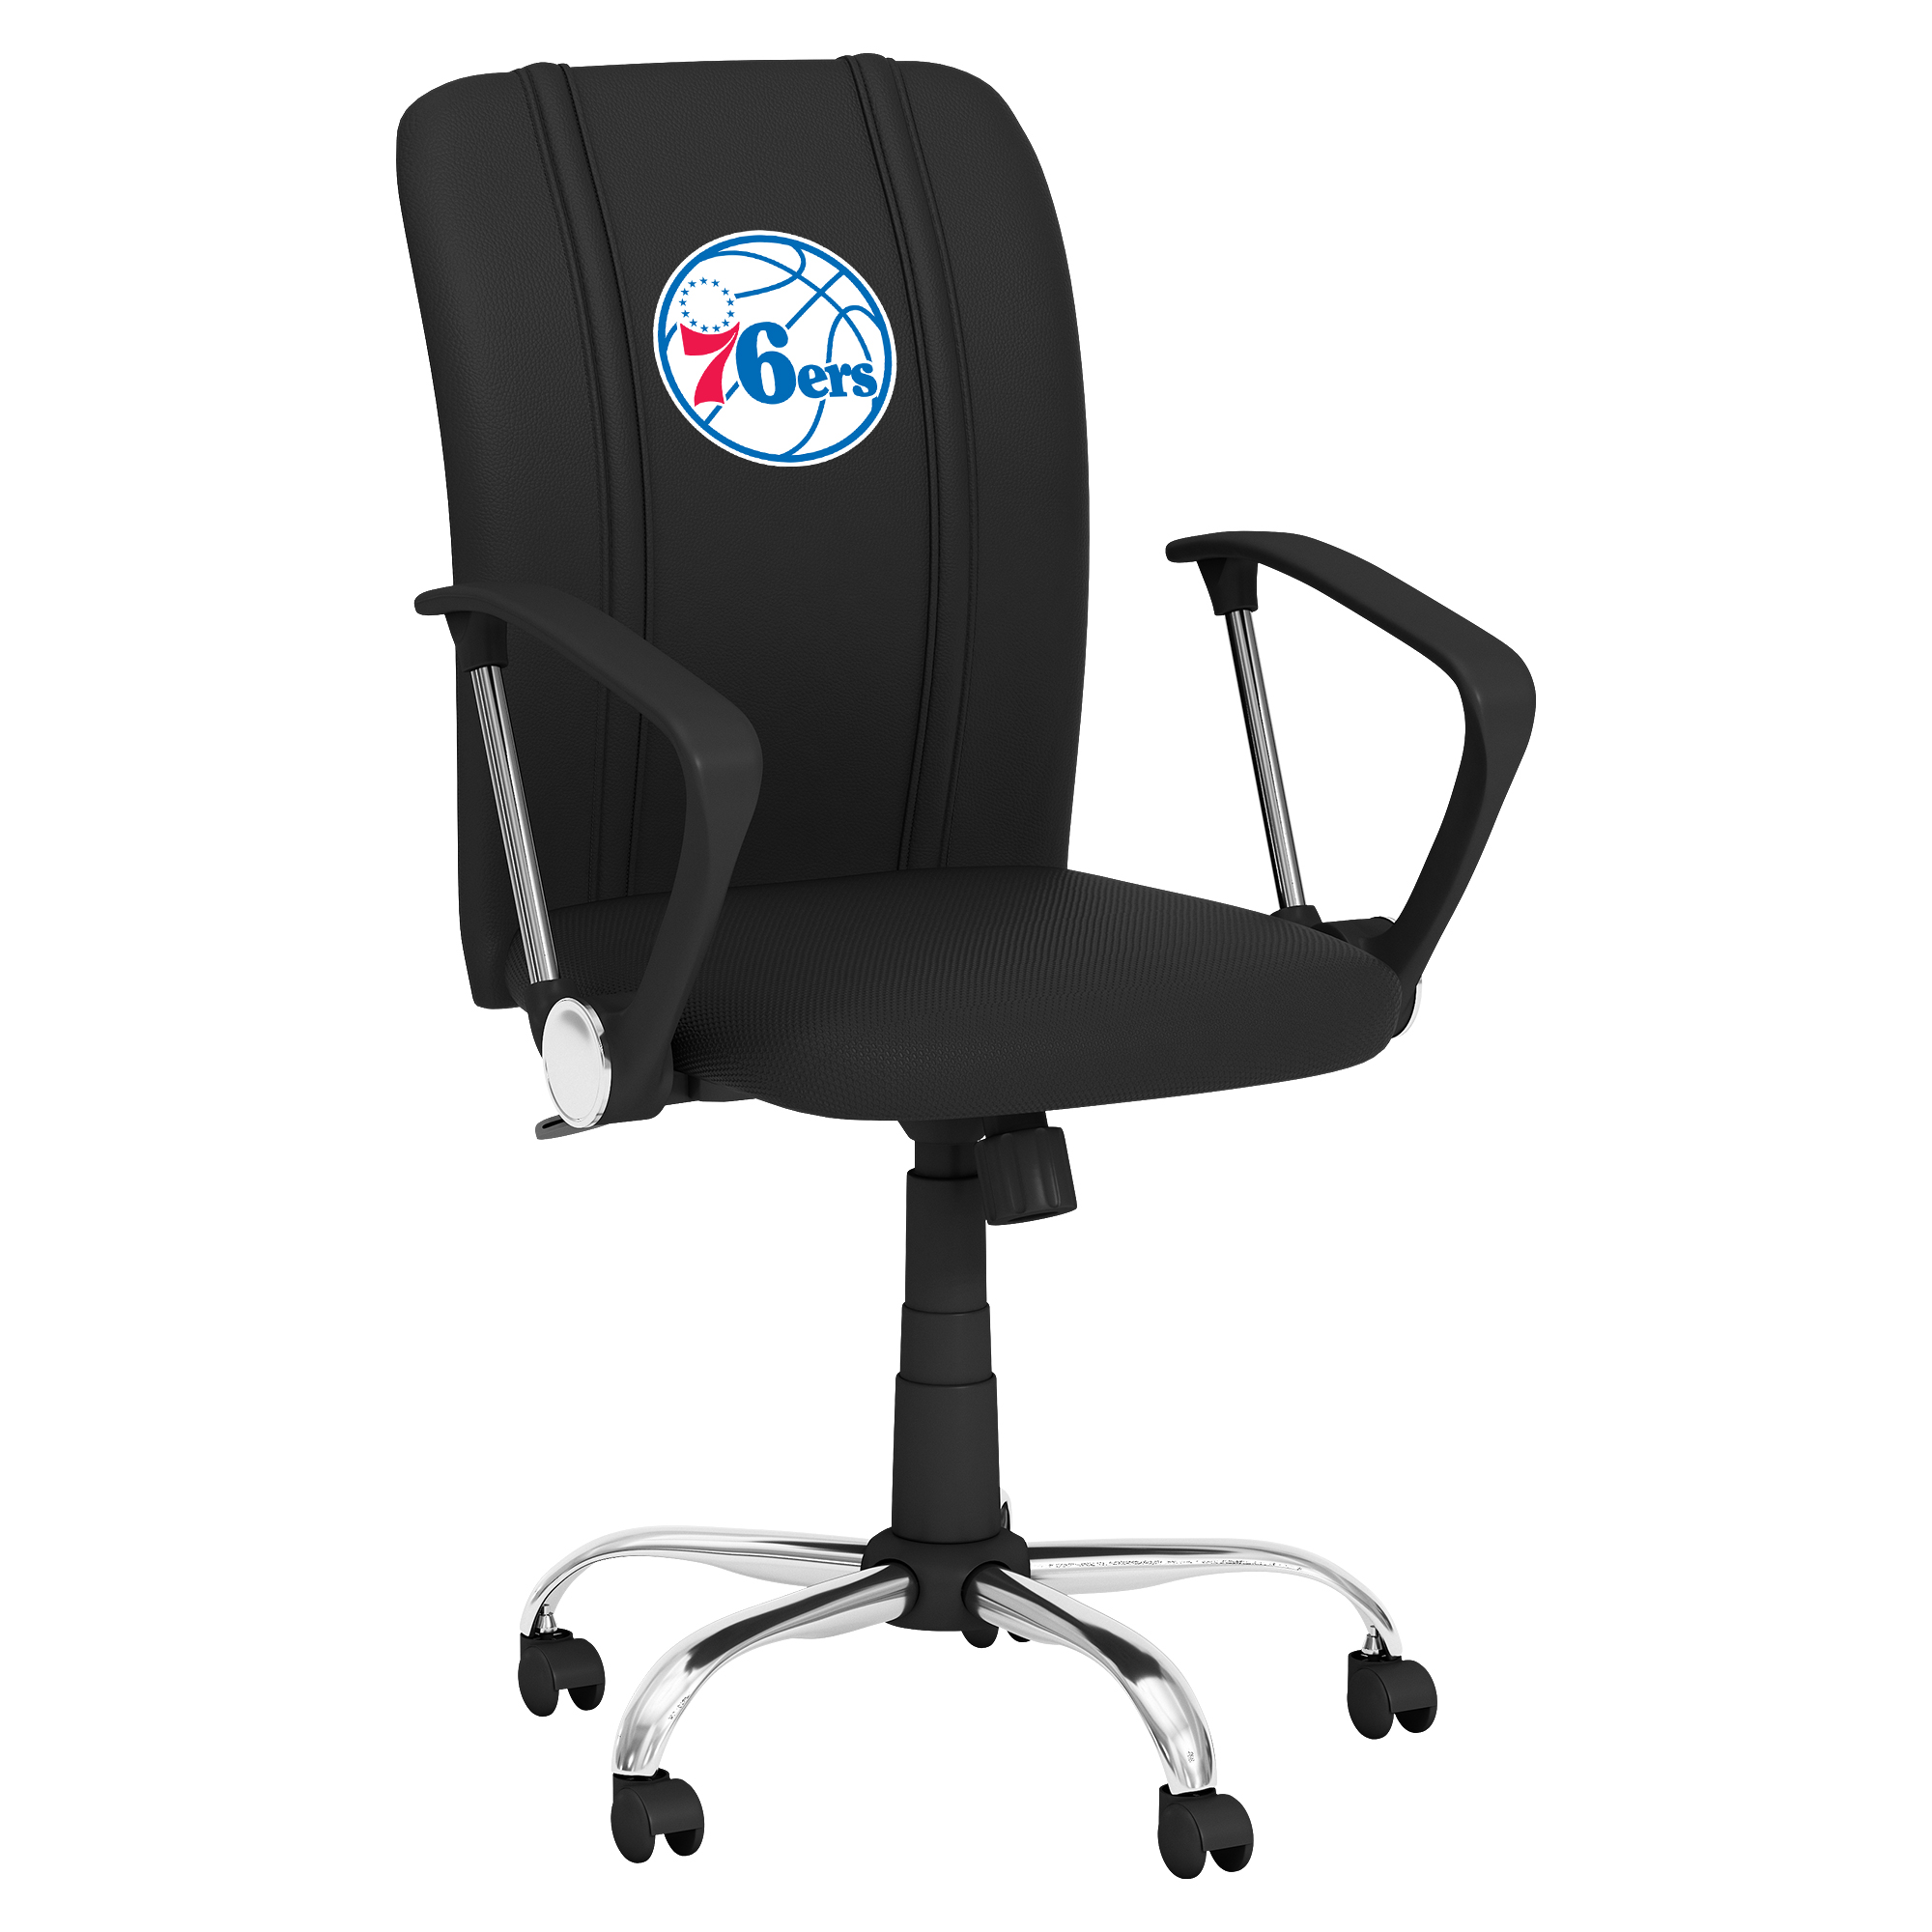 Philadelphia 76ers Curve Task Chair with Philadelphia 76ers Primary